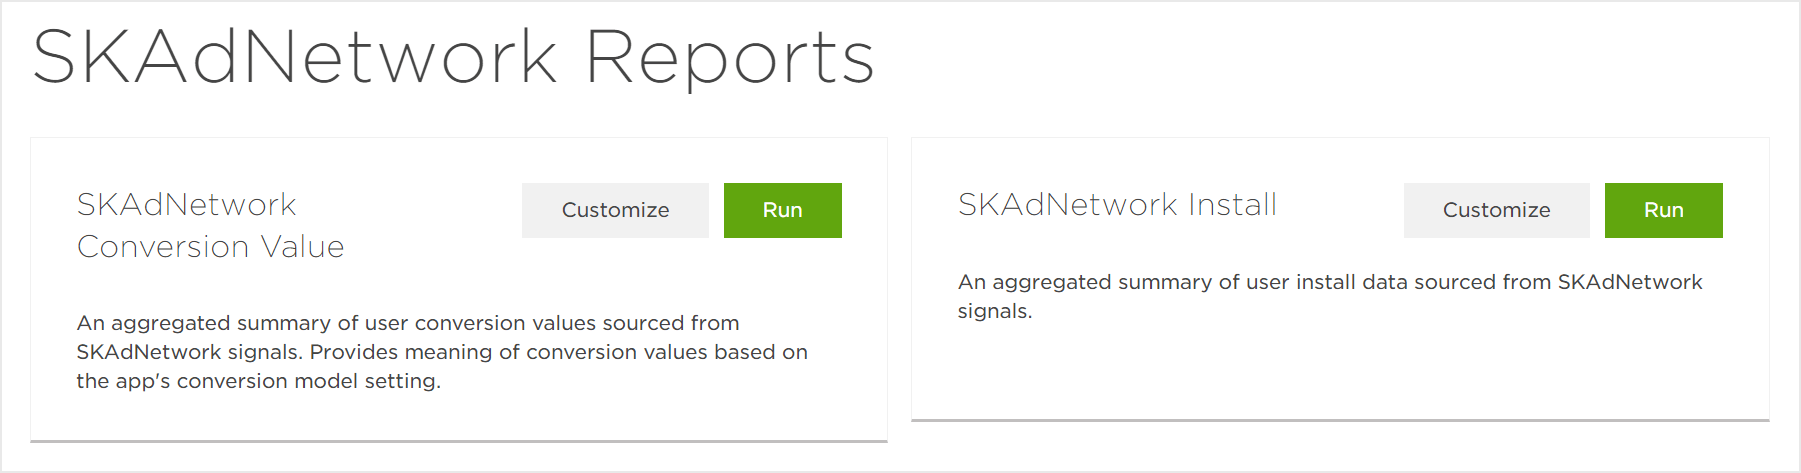 SKAdNetwork Reports